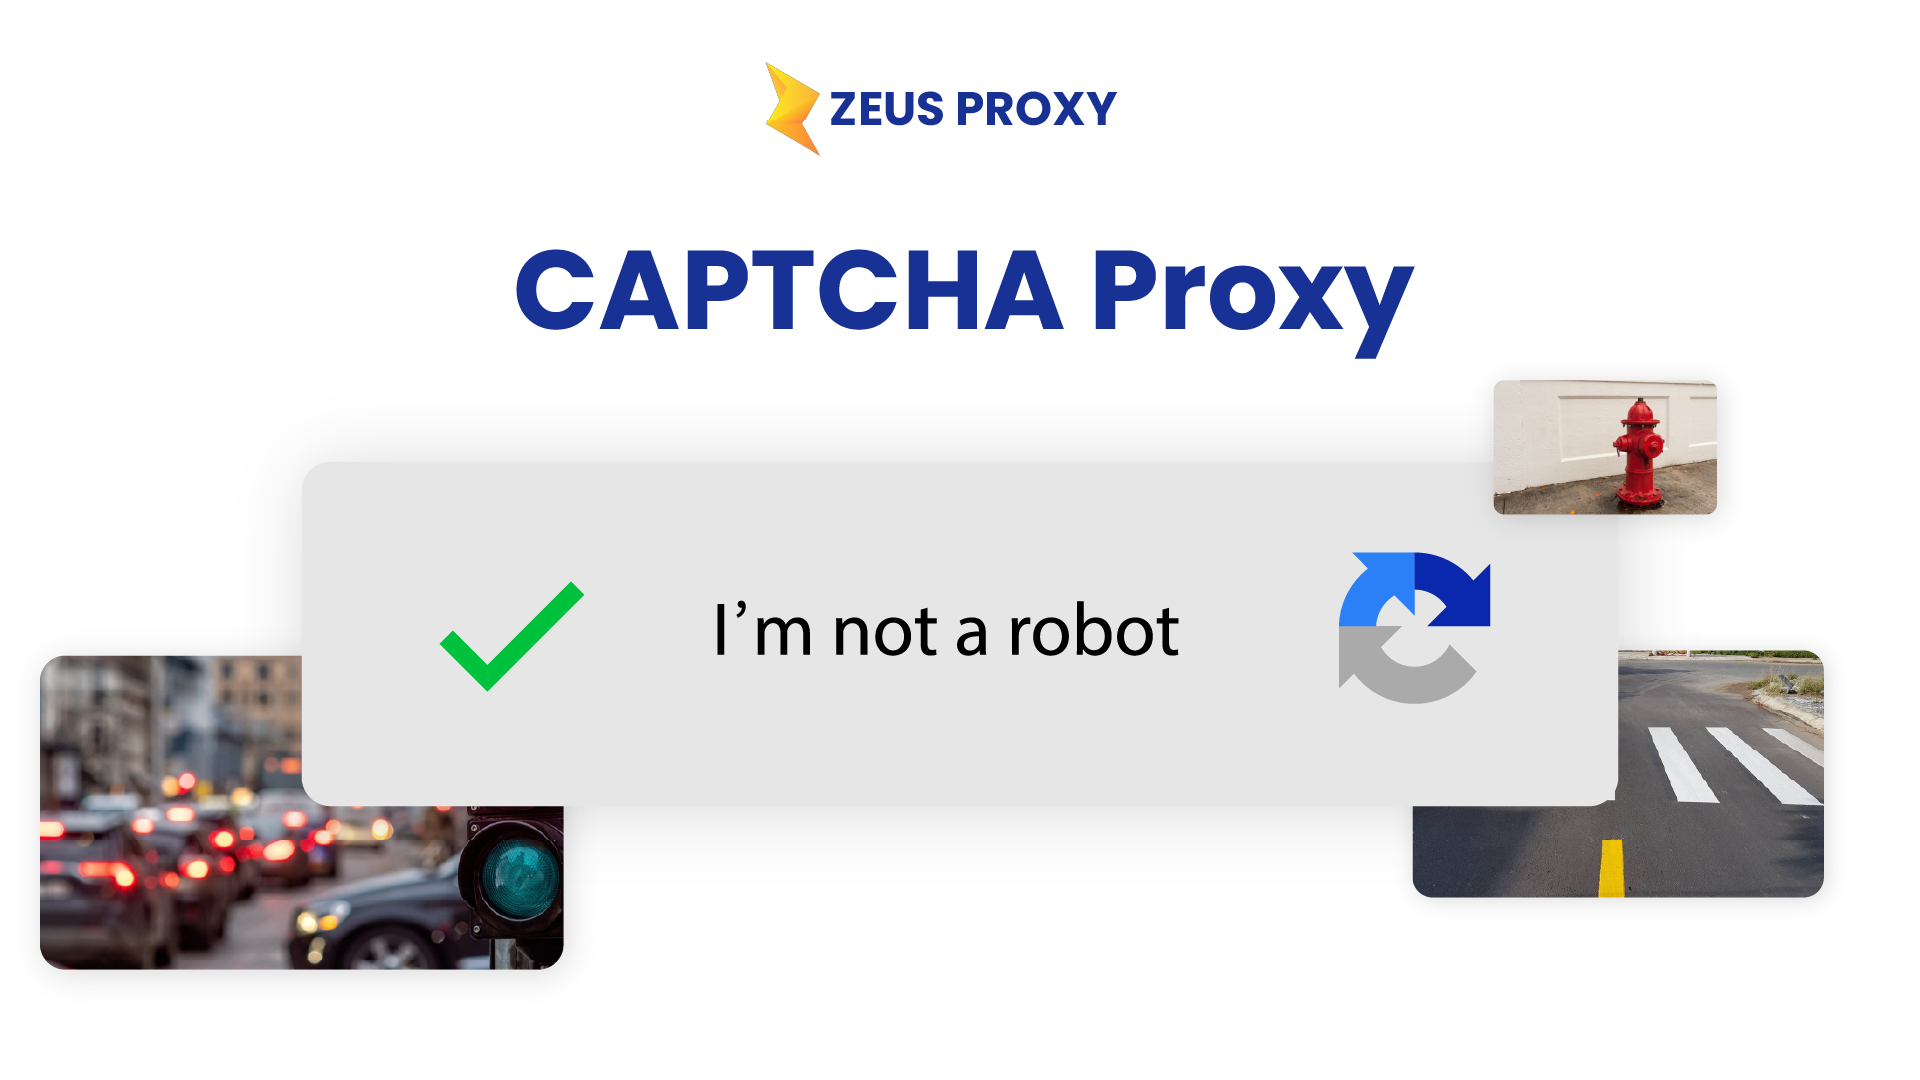 Captcha Proxy: How to Bypass Captcha with Zeus Proxy